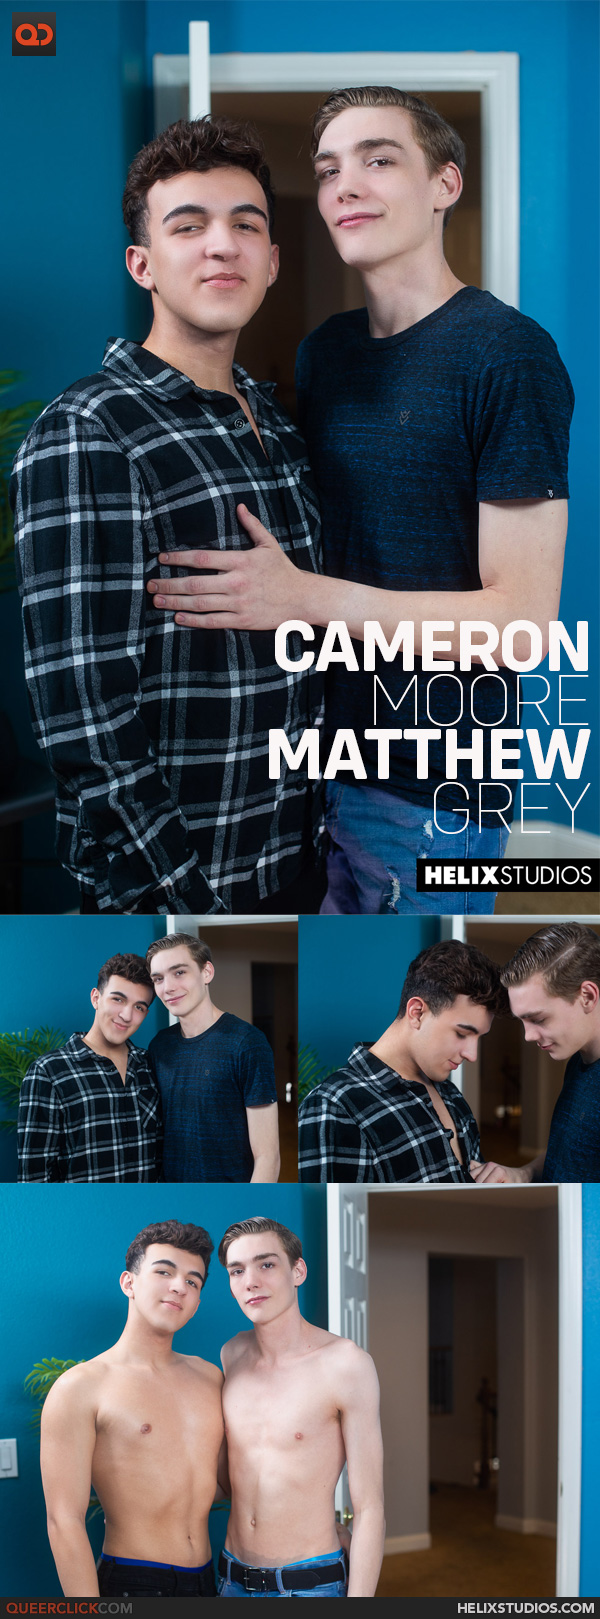 Helix Studios: Cameron Moore and Matthew Grey